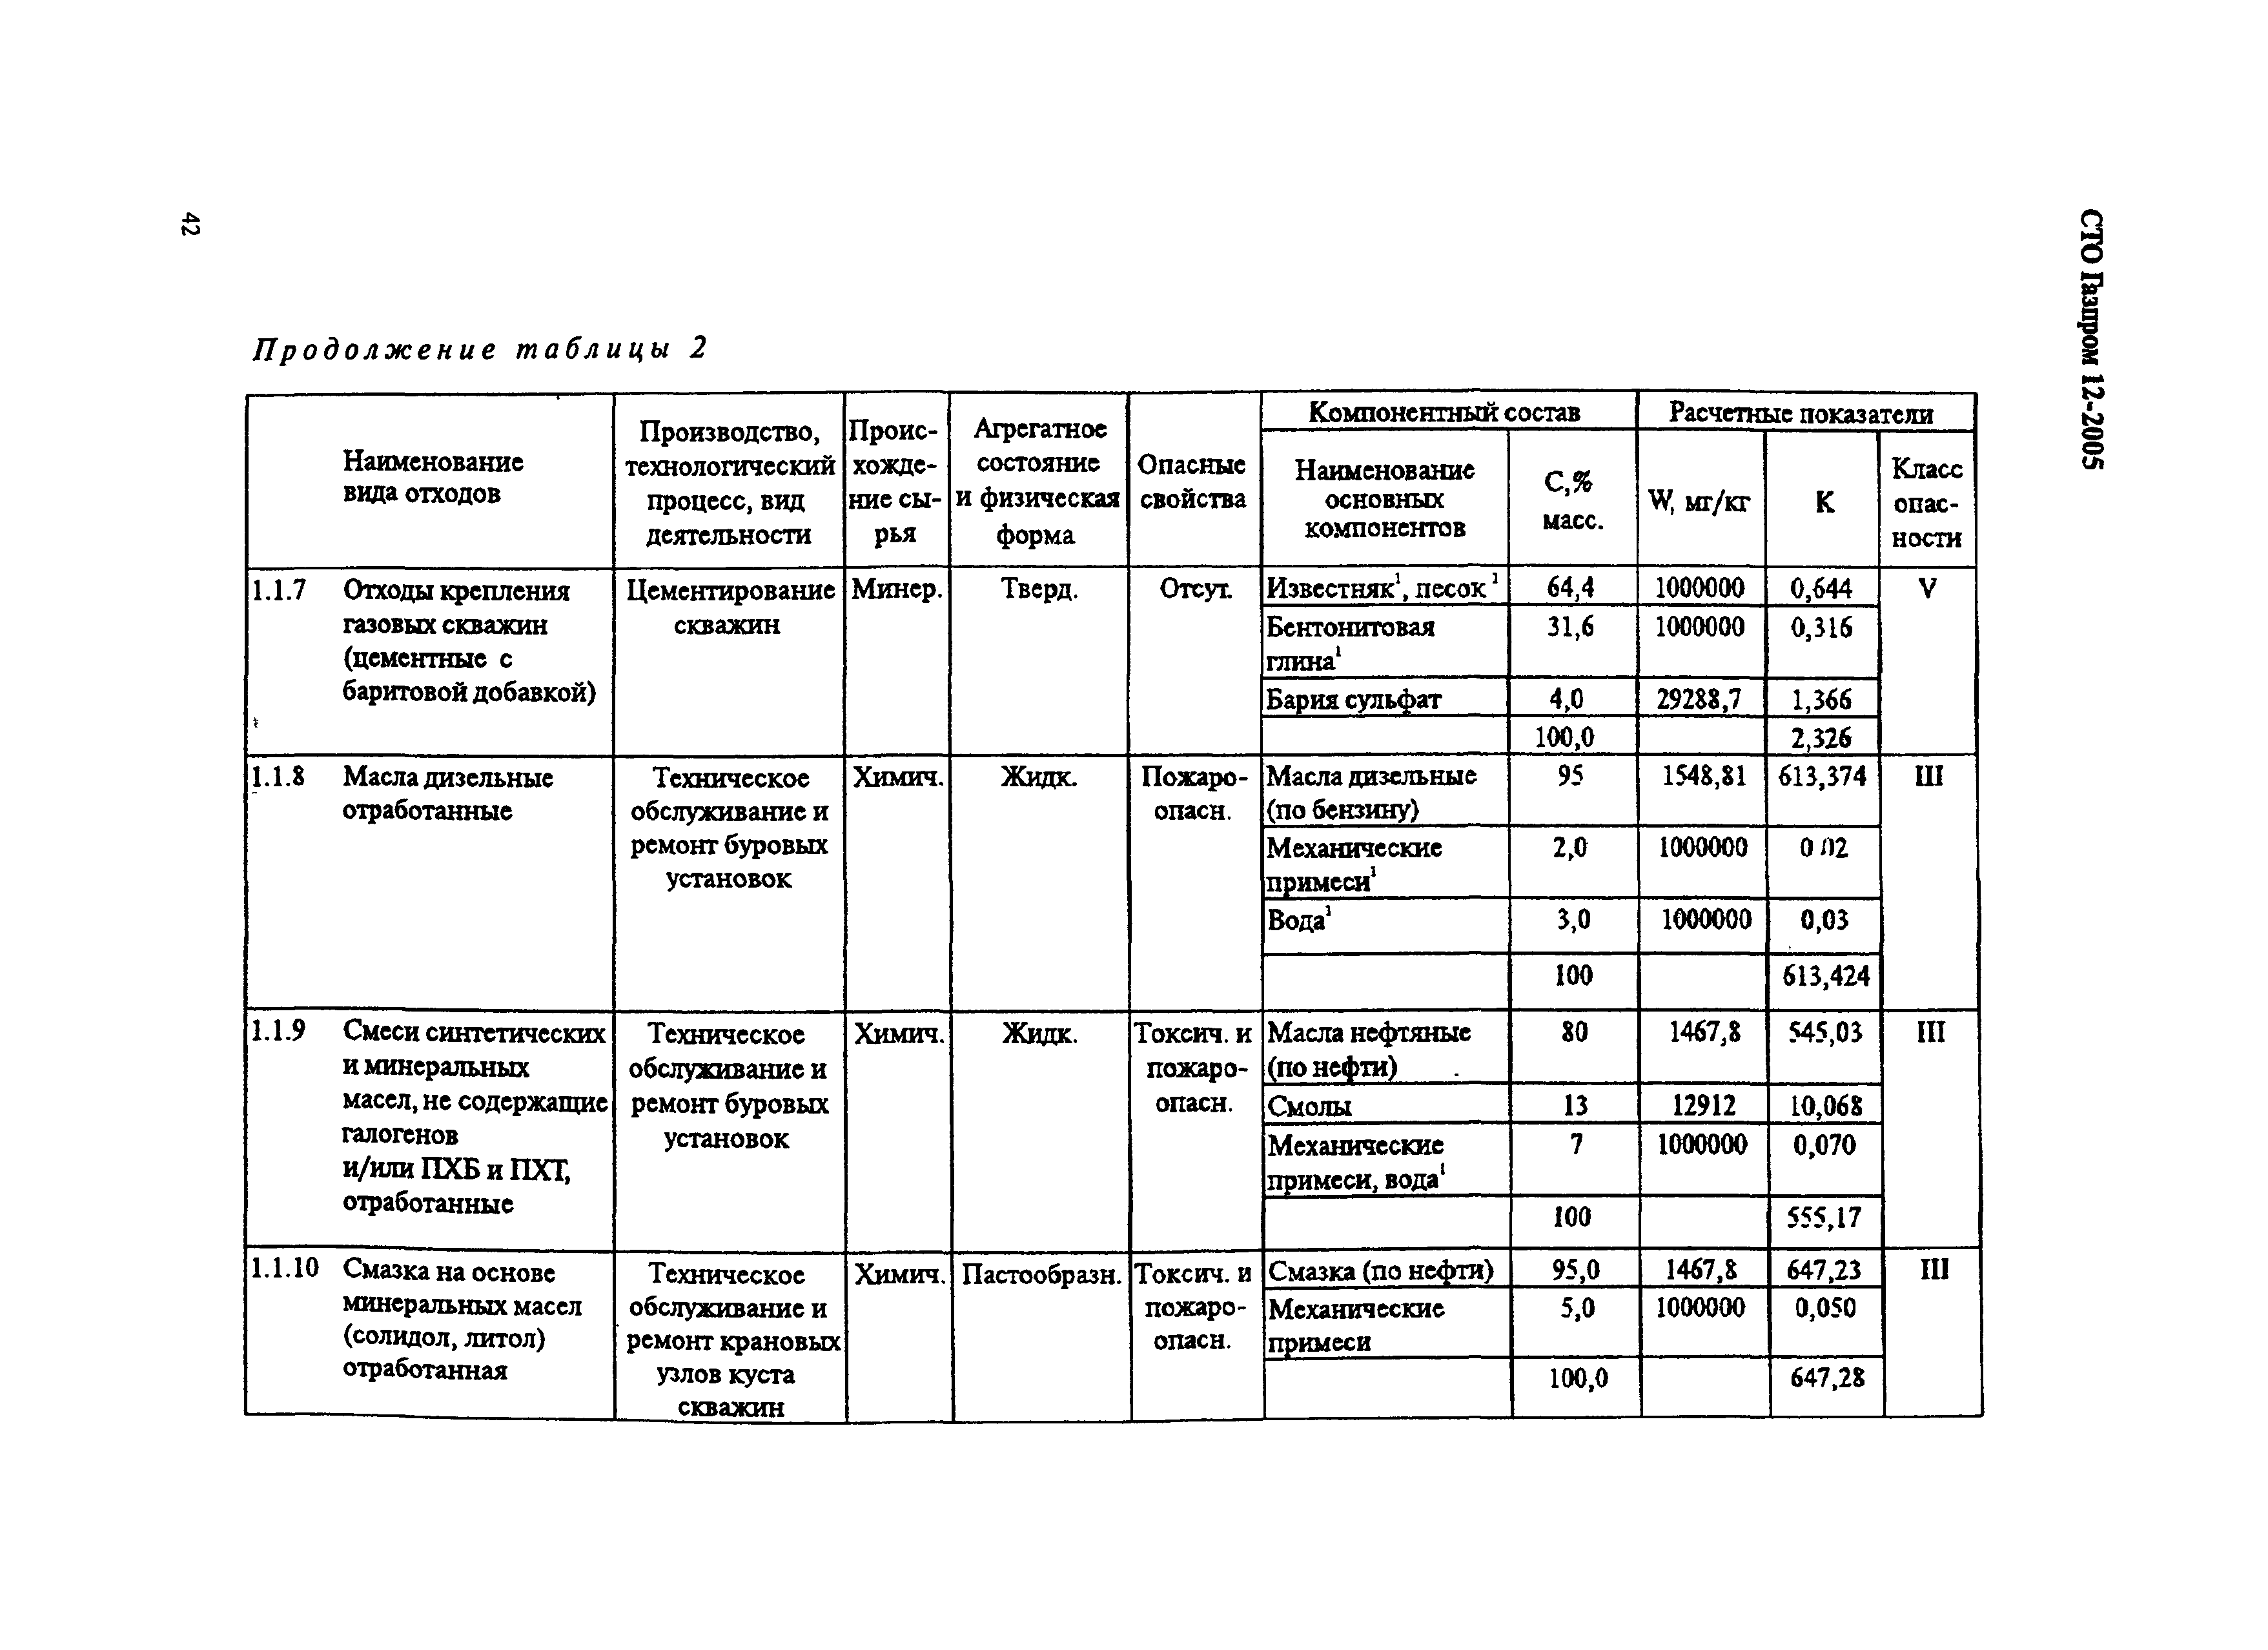 СТО Газпром 12-2005